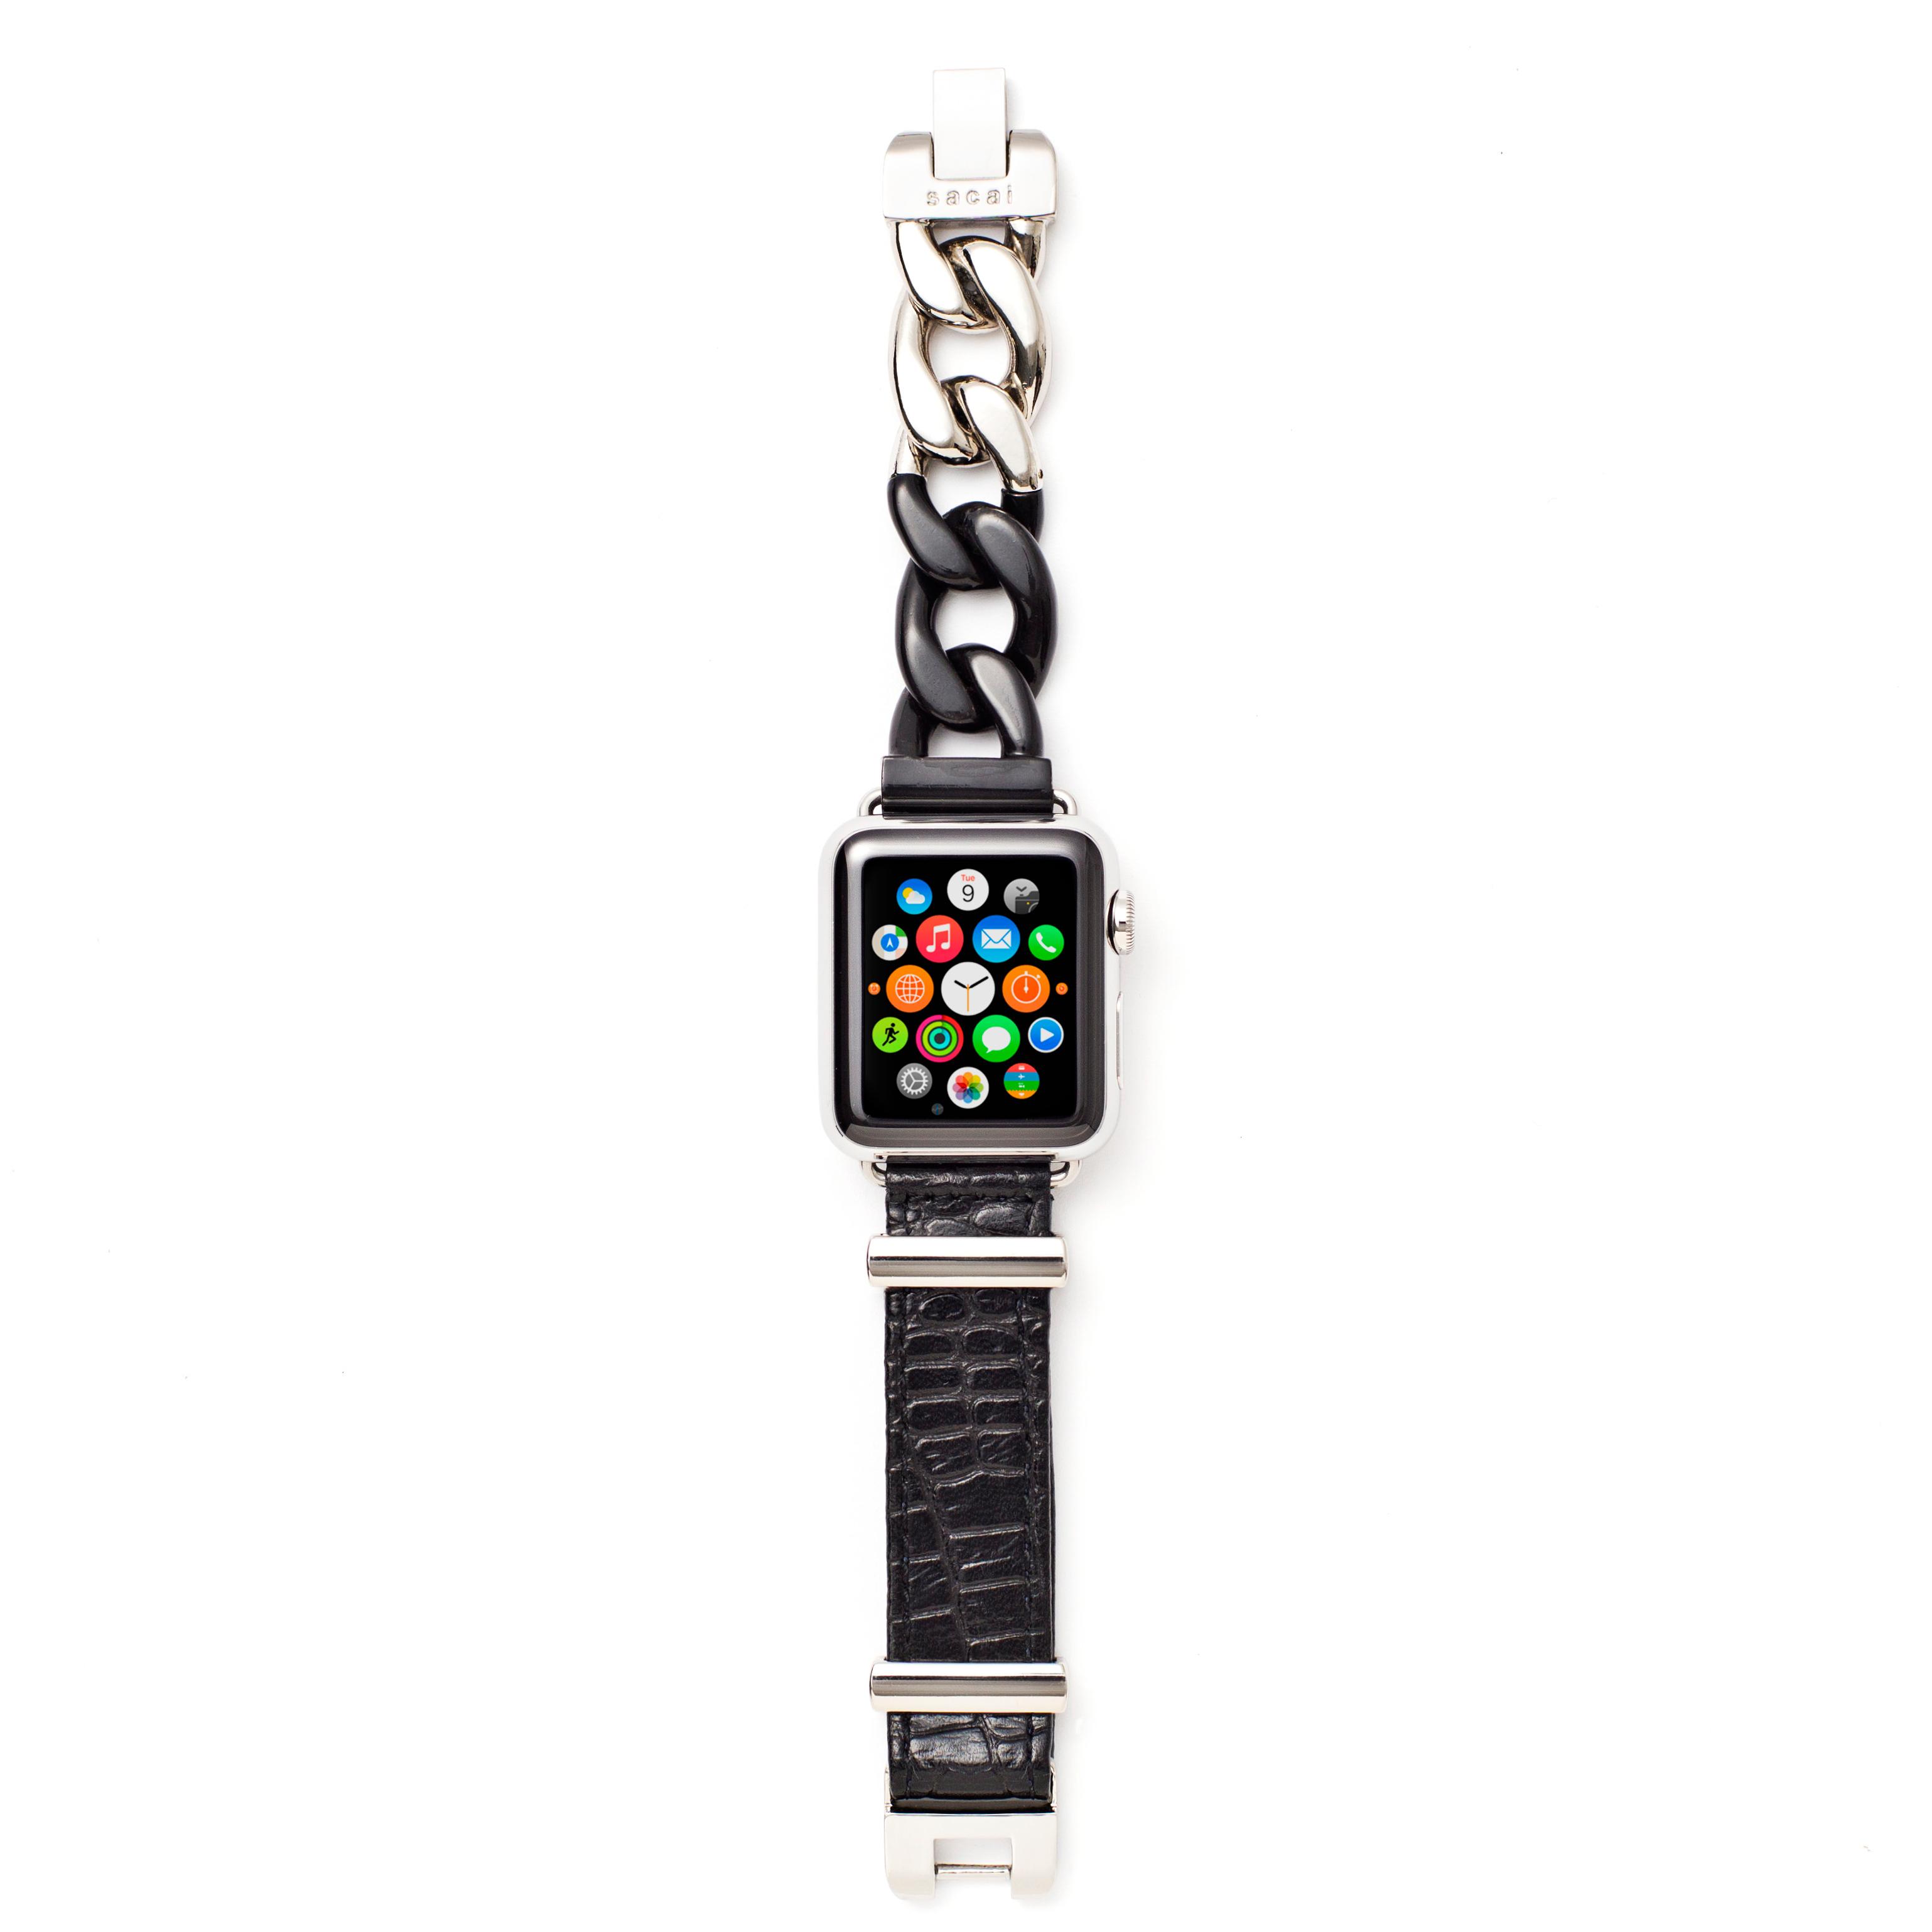 sacaiのApple Watch専用ストラップが発売開始！